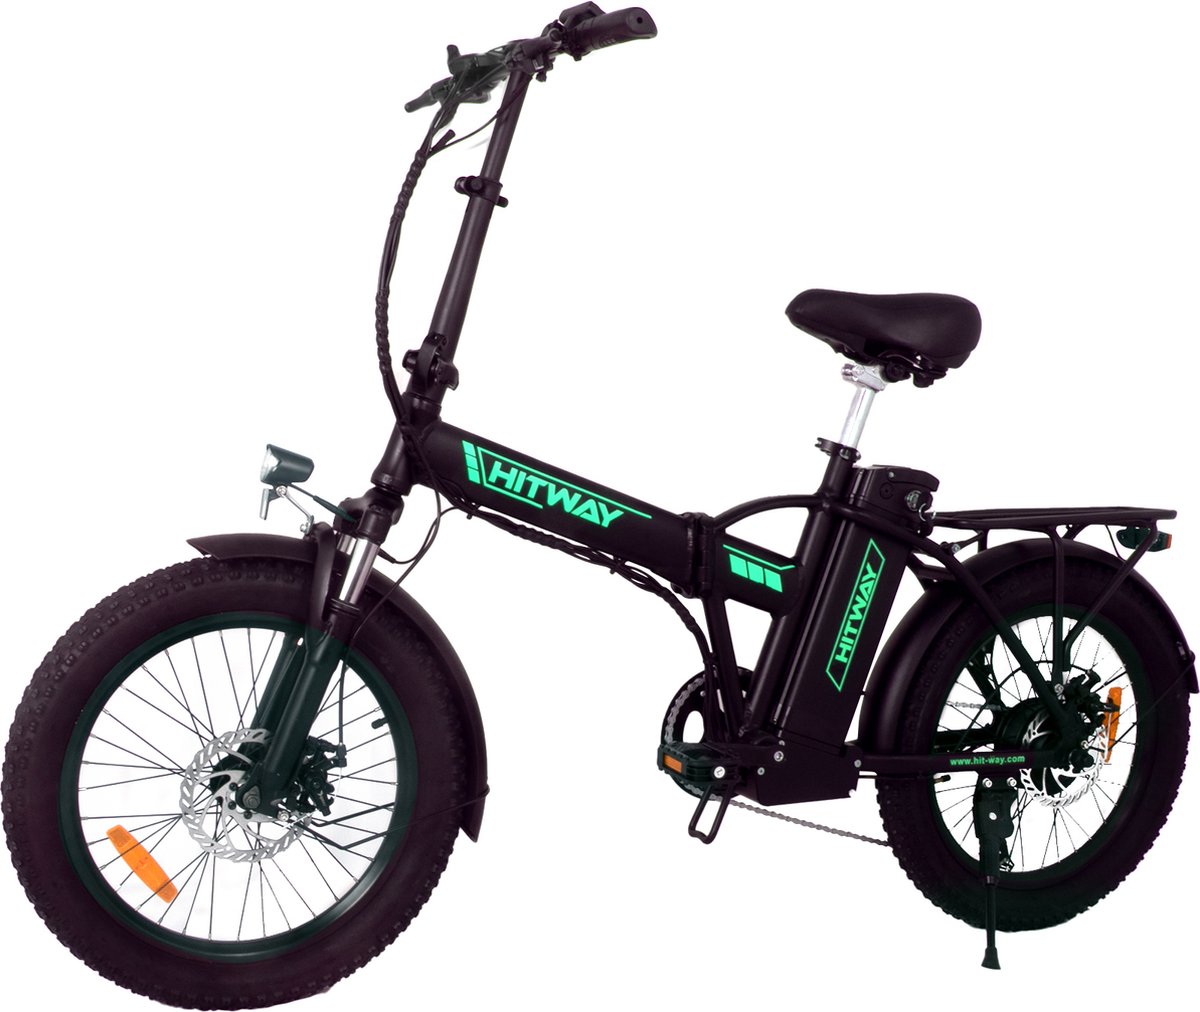 P4B - Fatbike - Elektrische Fatbike - Hitway - Elektrische Fiets - Elektrische Vouwfiets - E-bike - 1 jaar garantie